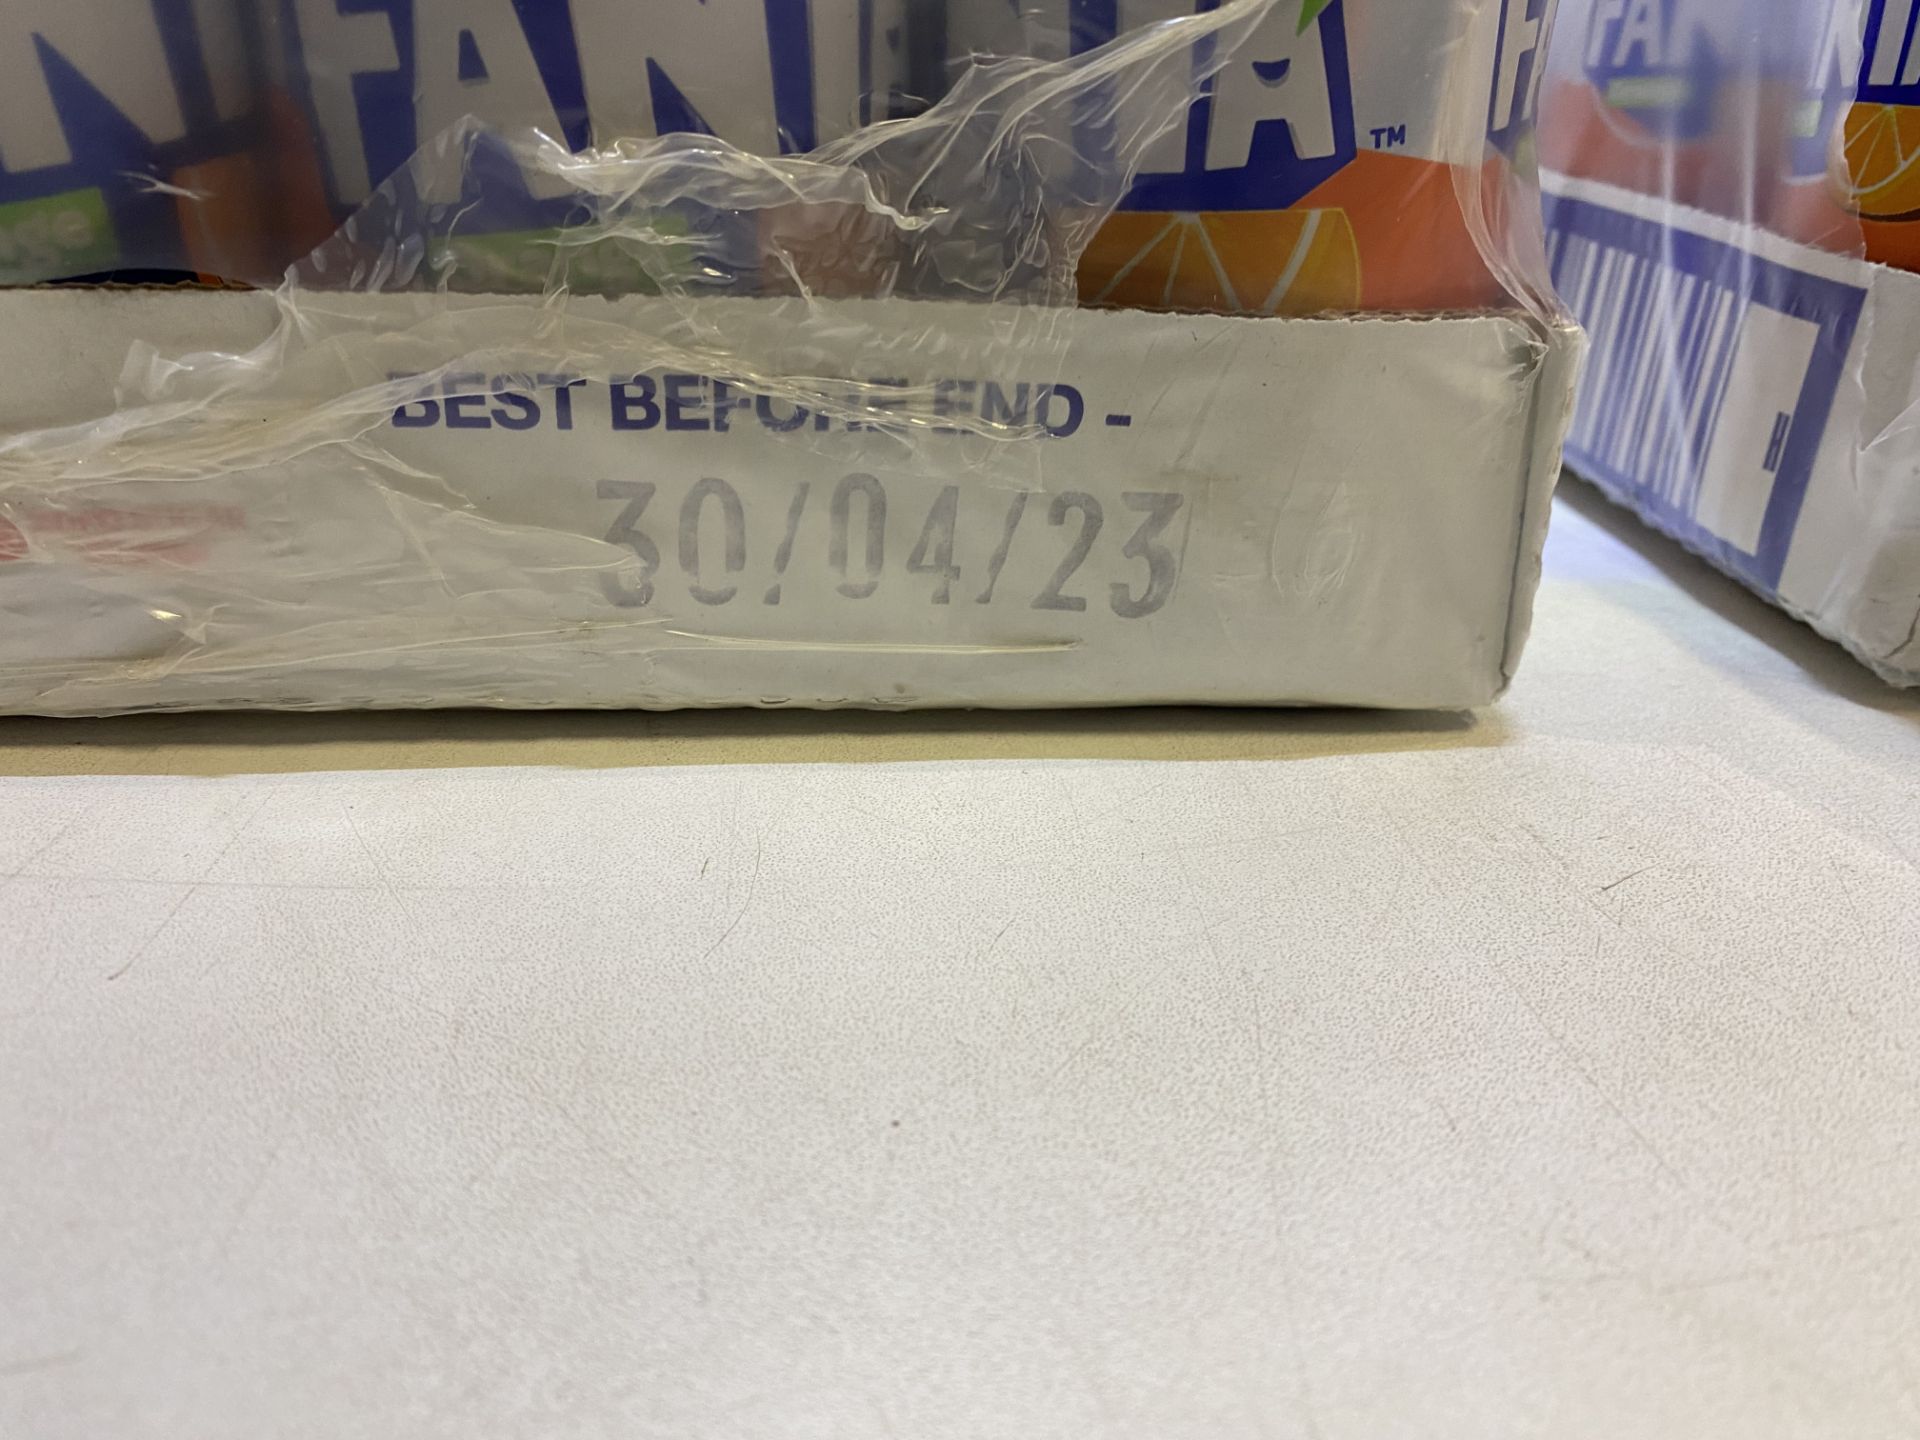 3 x 24 Packs Of Fanta Orange Zero Sugar Cans, 330ml, BBD 30/04/23 - Image 3 of 4